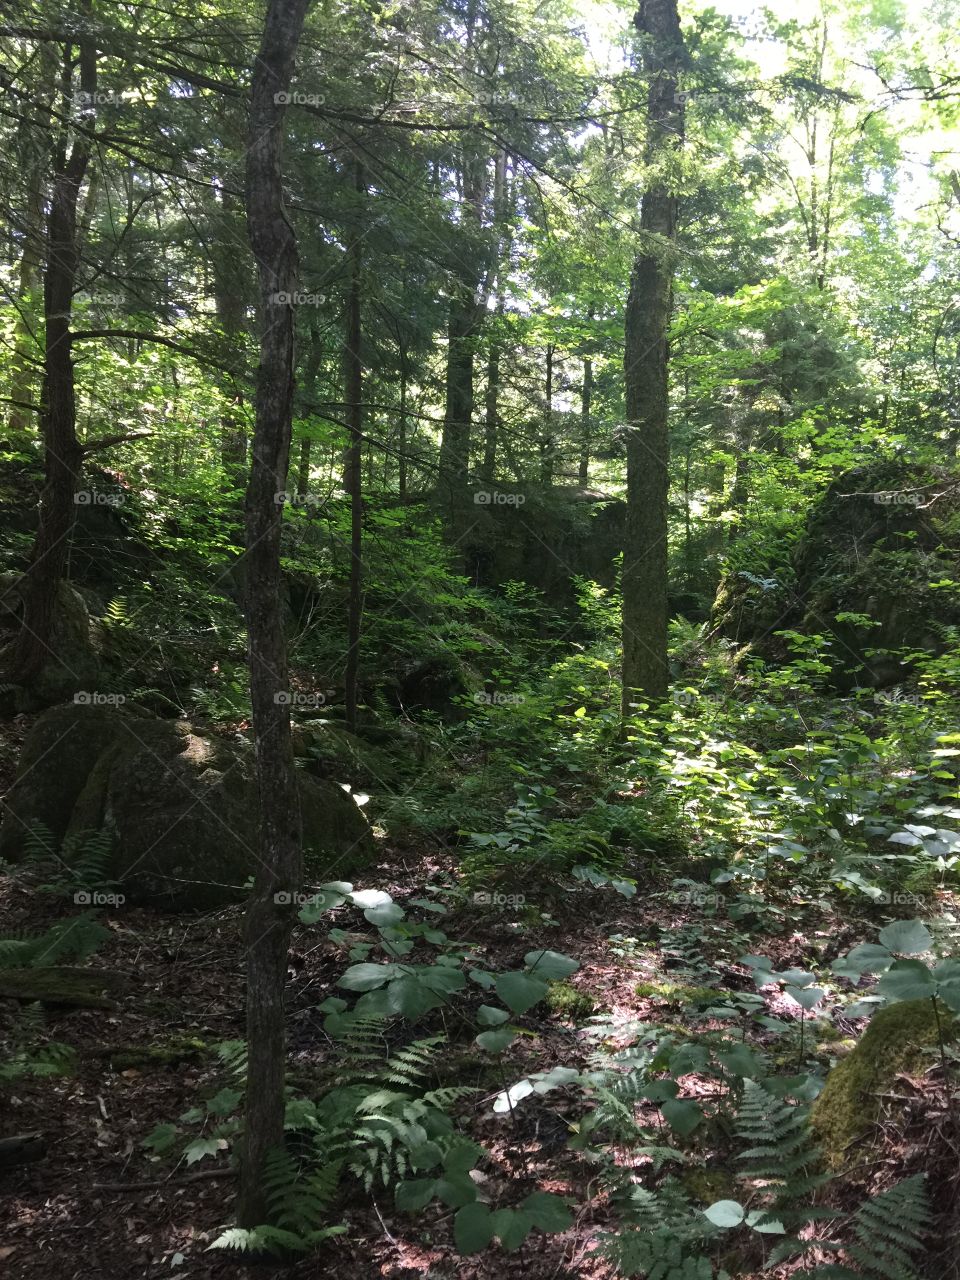 Woods surrounding Auger falls